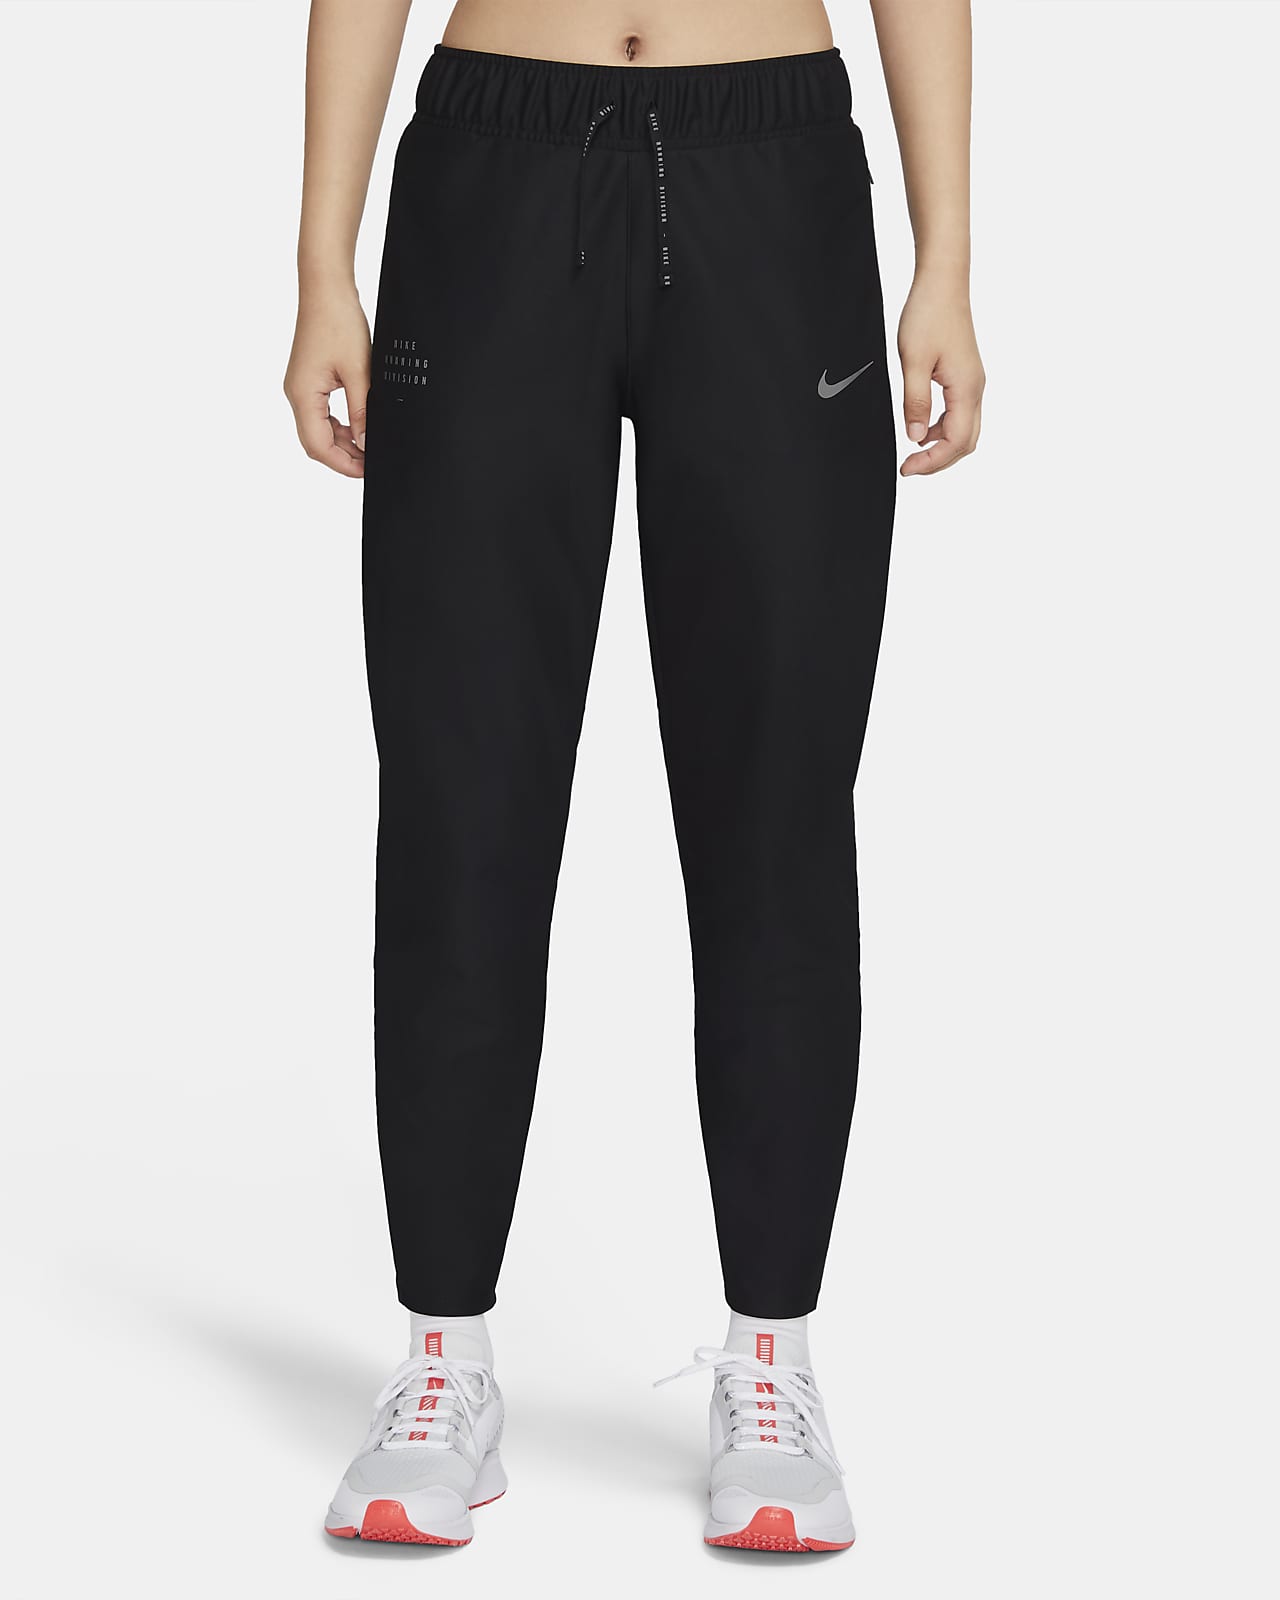 Women's Nike Running Pants